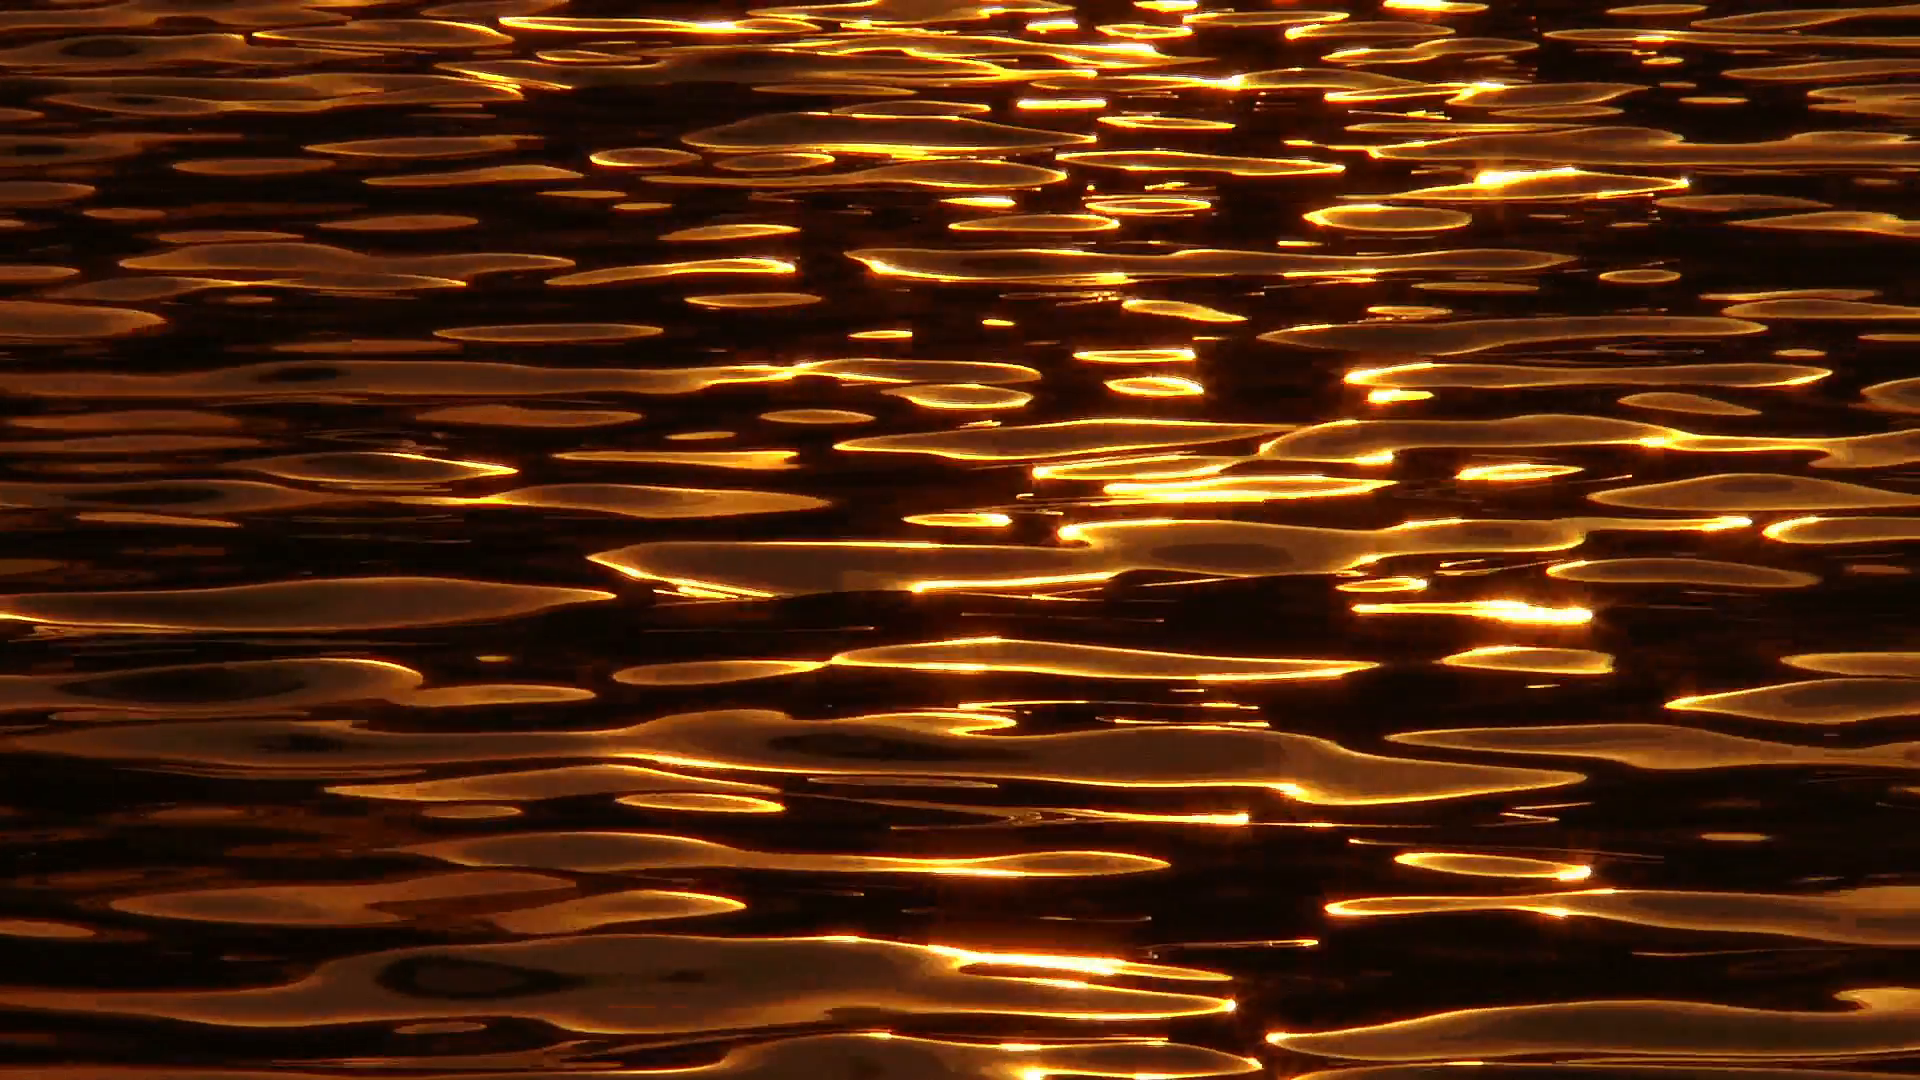 golden water ripples - beautiful golden sunset reflection sparkles ...